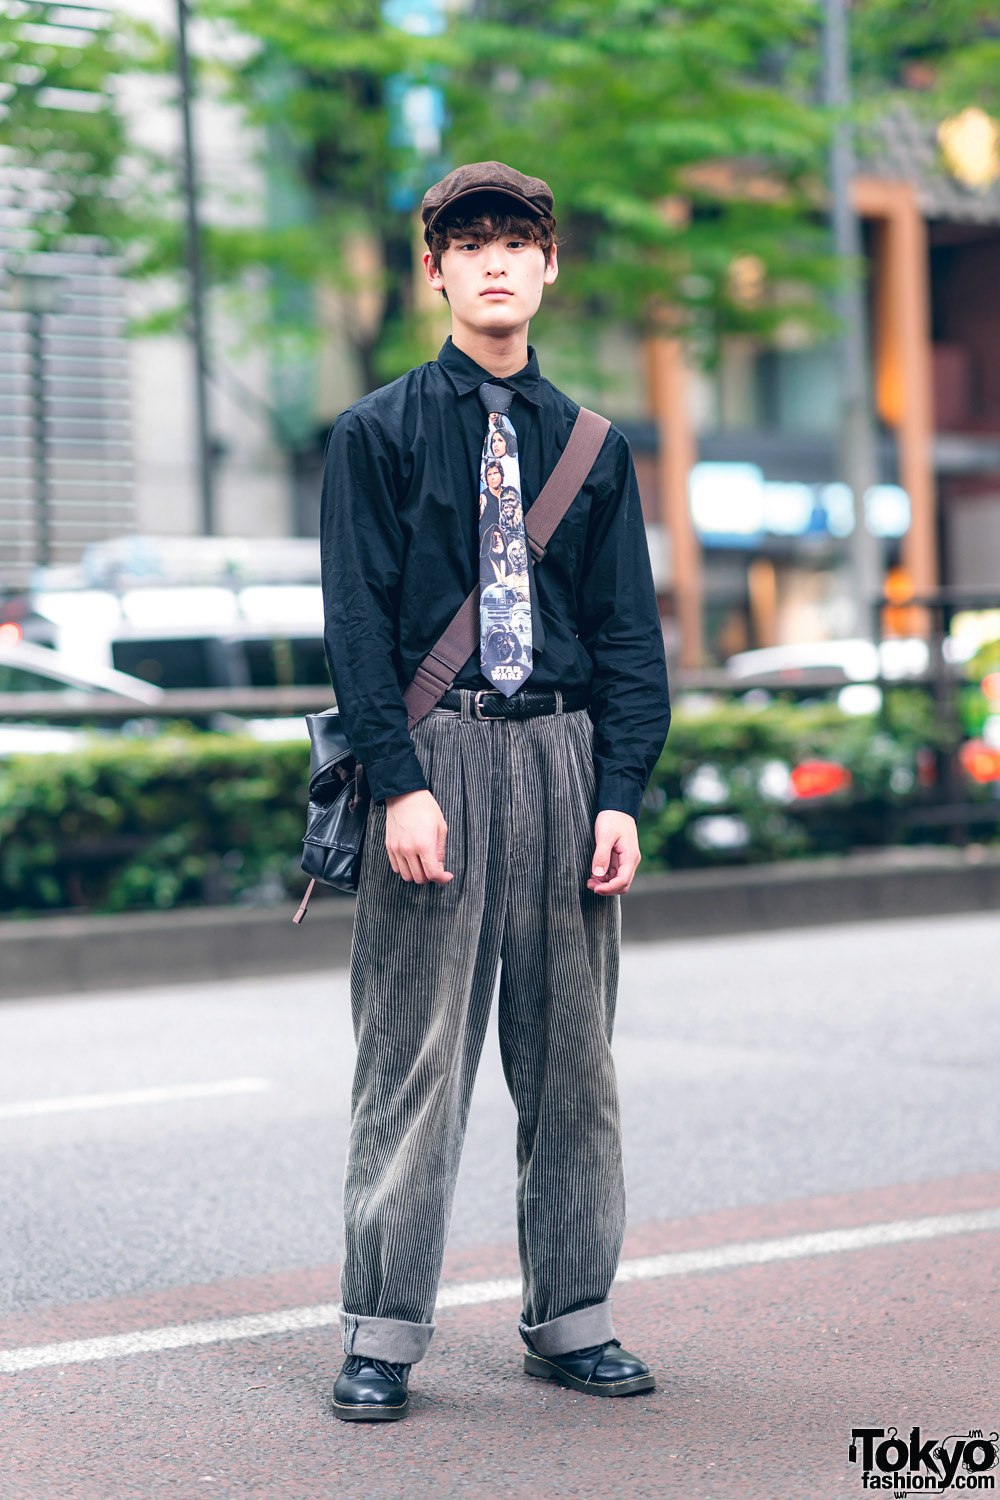 Retro Vintage Menswear Street Style w/ Newsboy Cap, Star Wars Necktie, Cuffed Corduroy Pants, Takeo Kikuchi Crossbody Bag & Vintage Boots